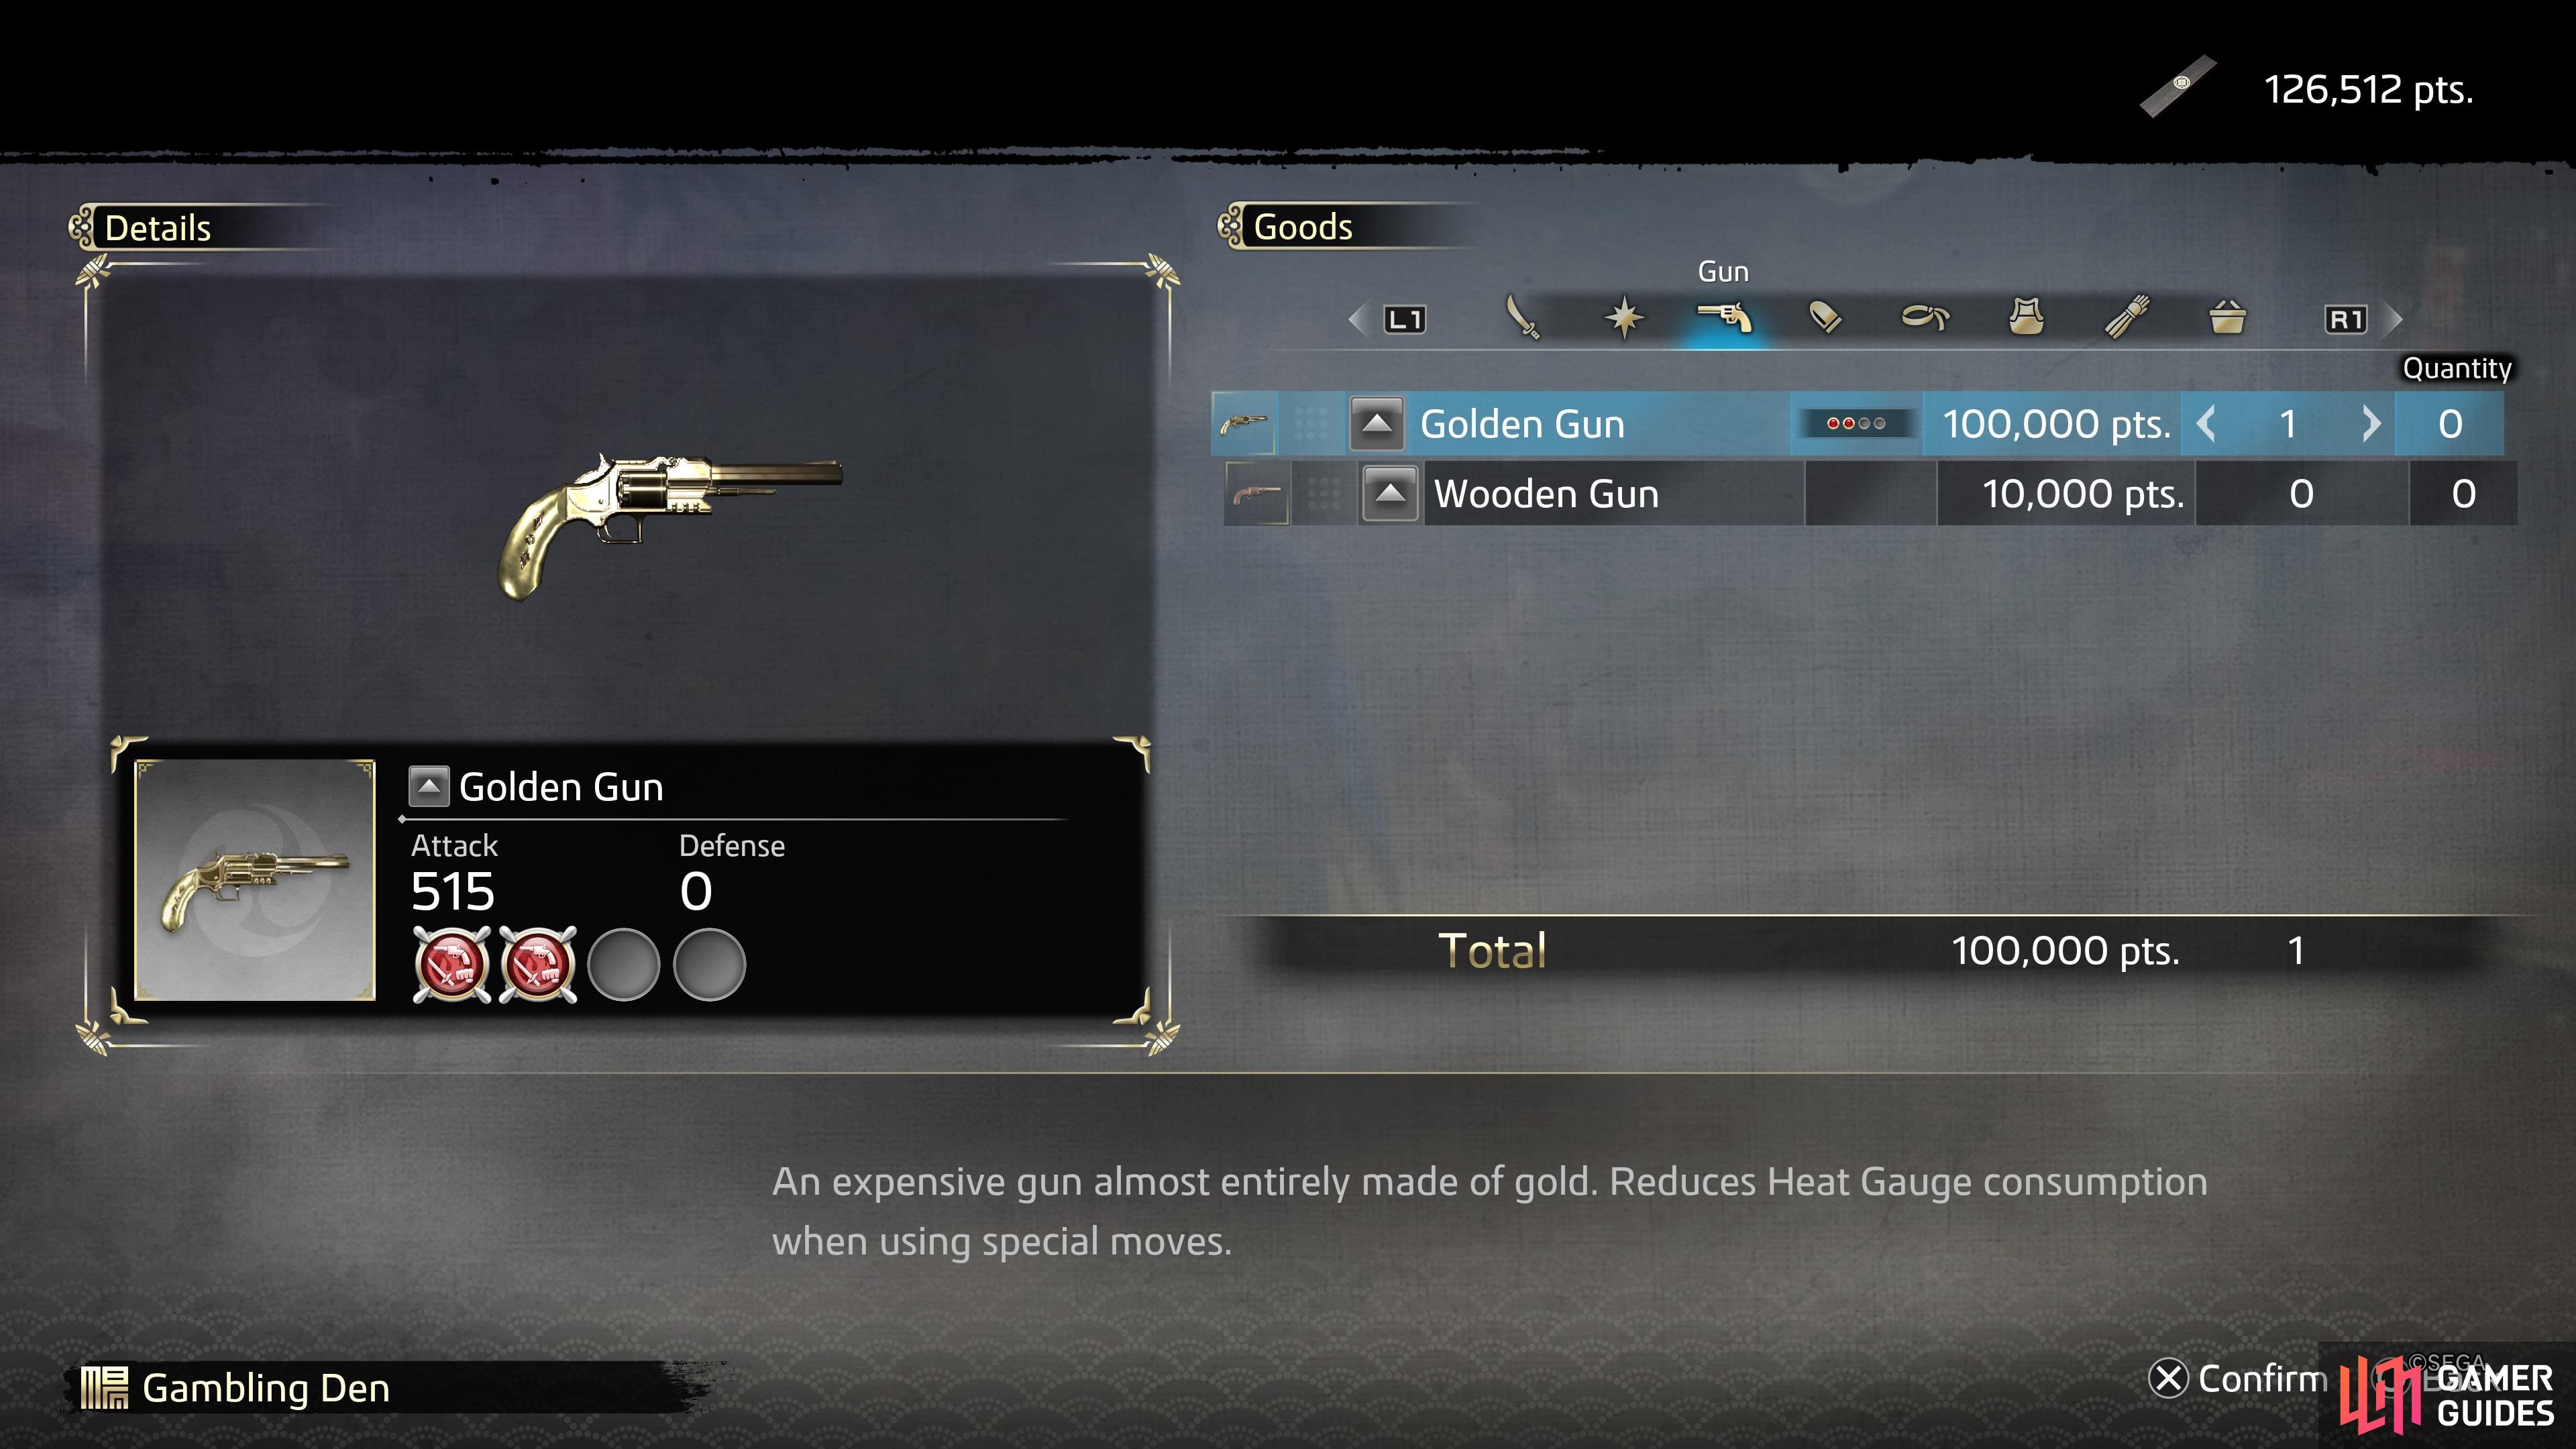 You can even earn enough to get the Golden Gun from the Gambling Den